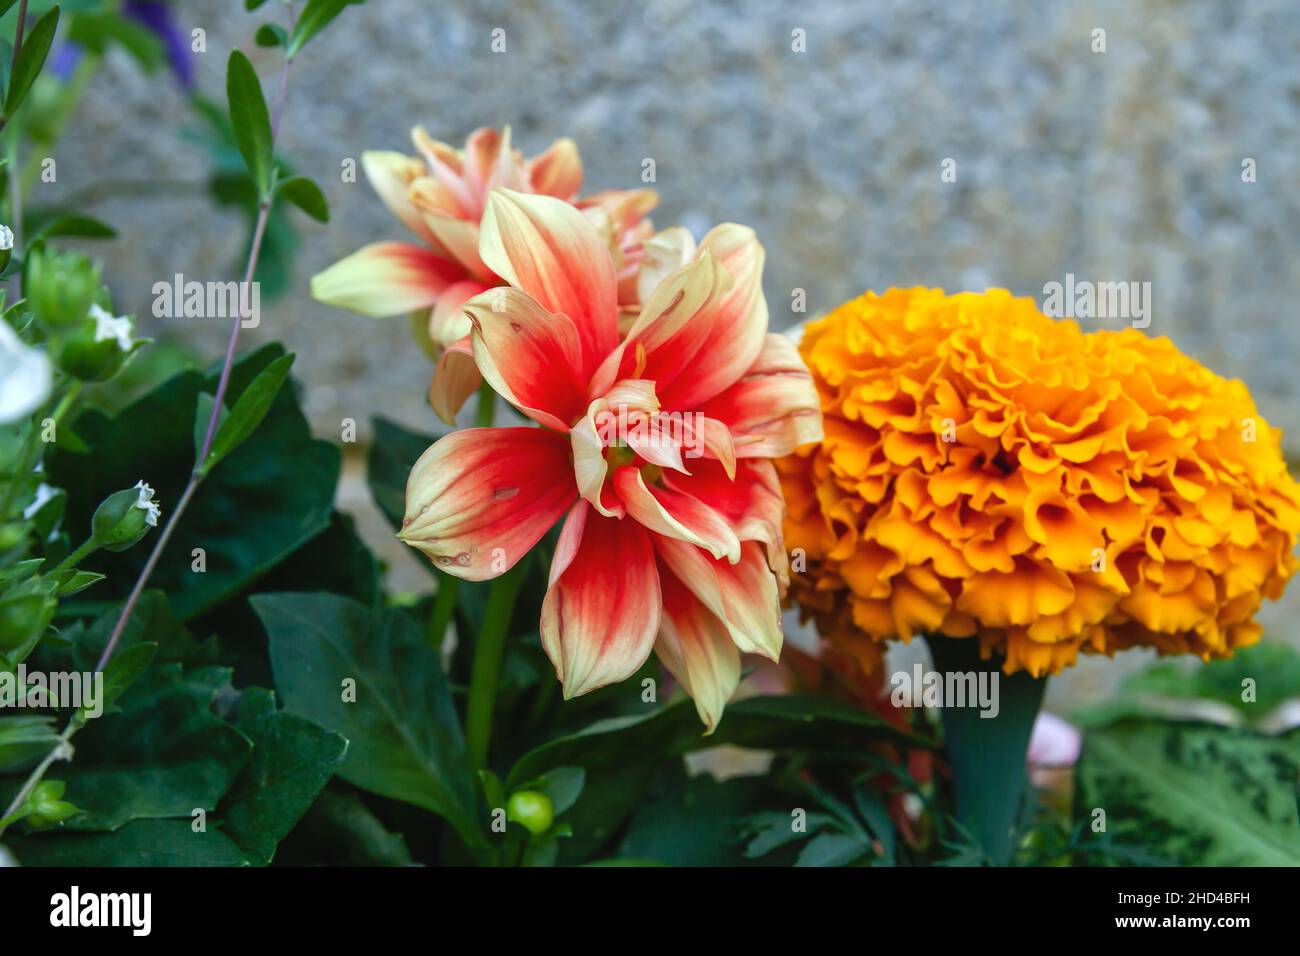 Dhalia pinnata red and pale yellow flower Stock Photo